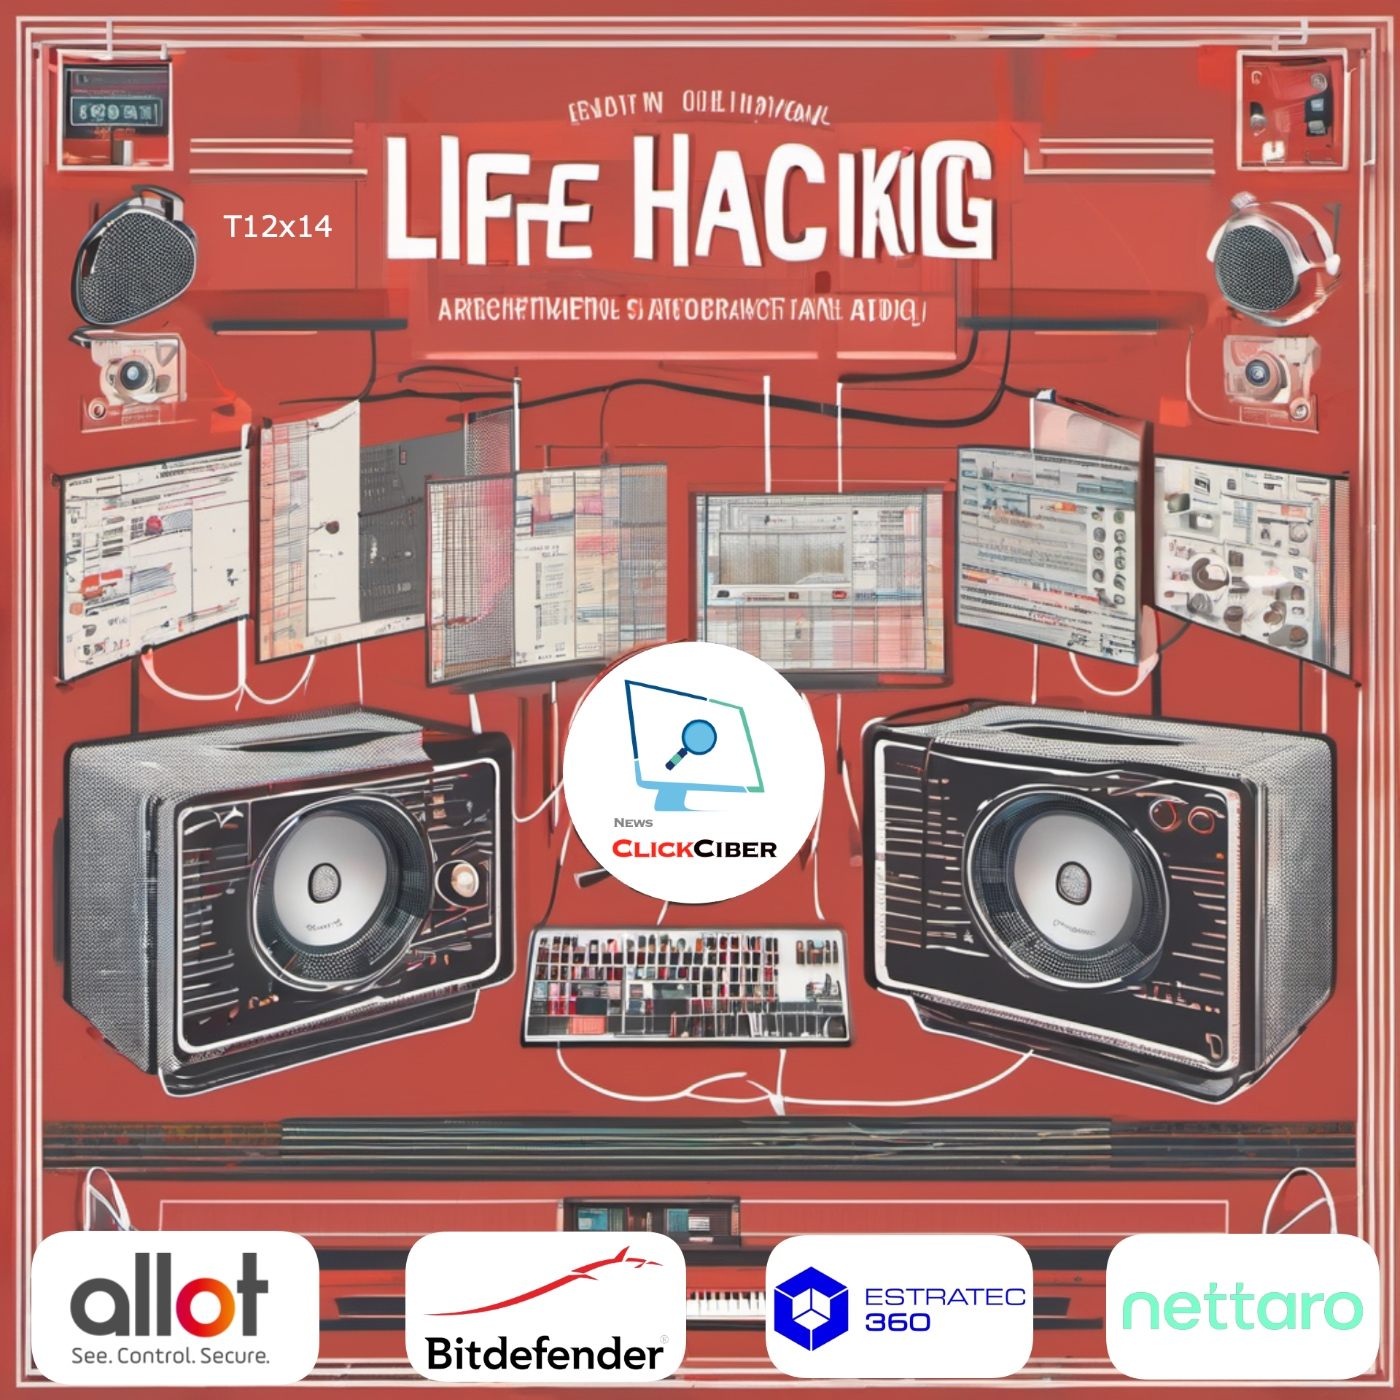 T12x14 - Life Hacking